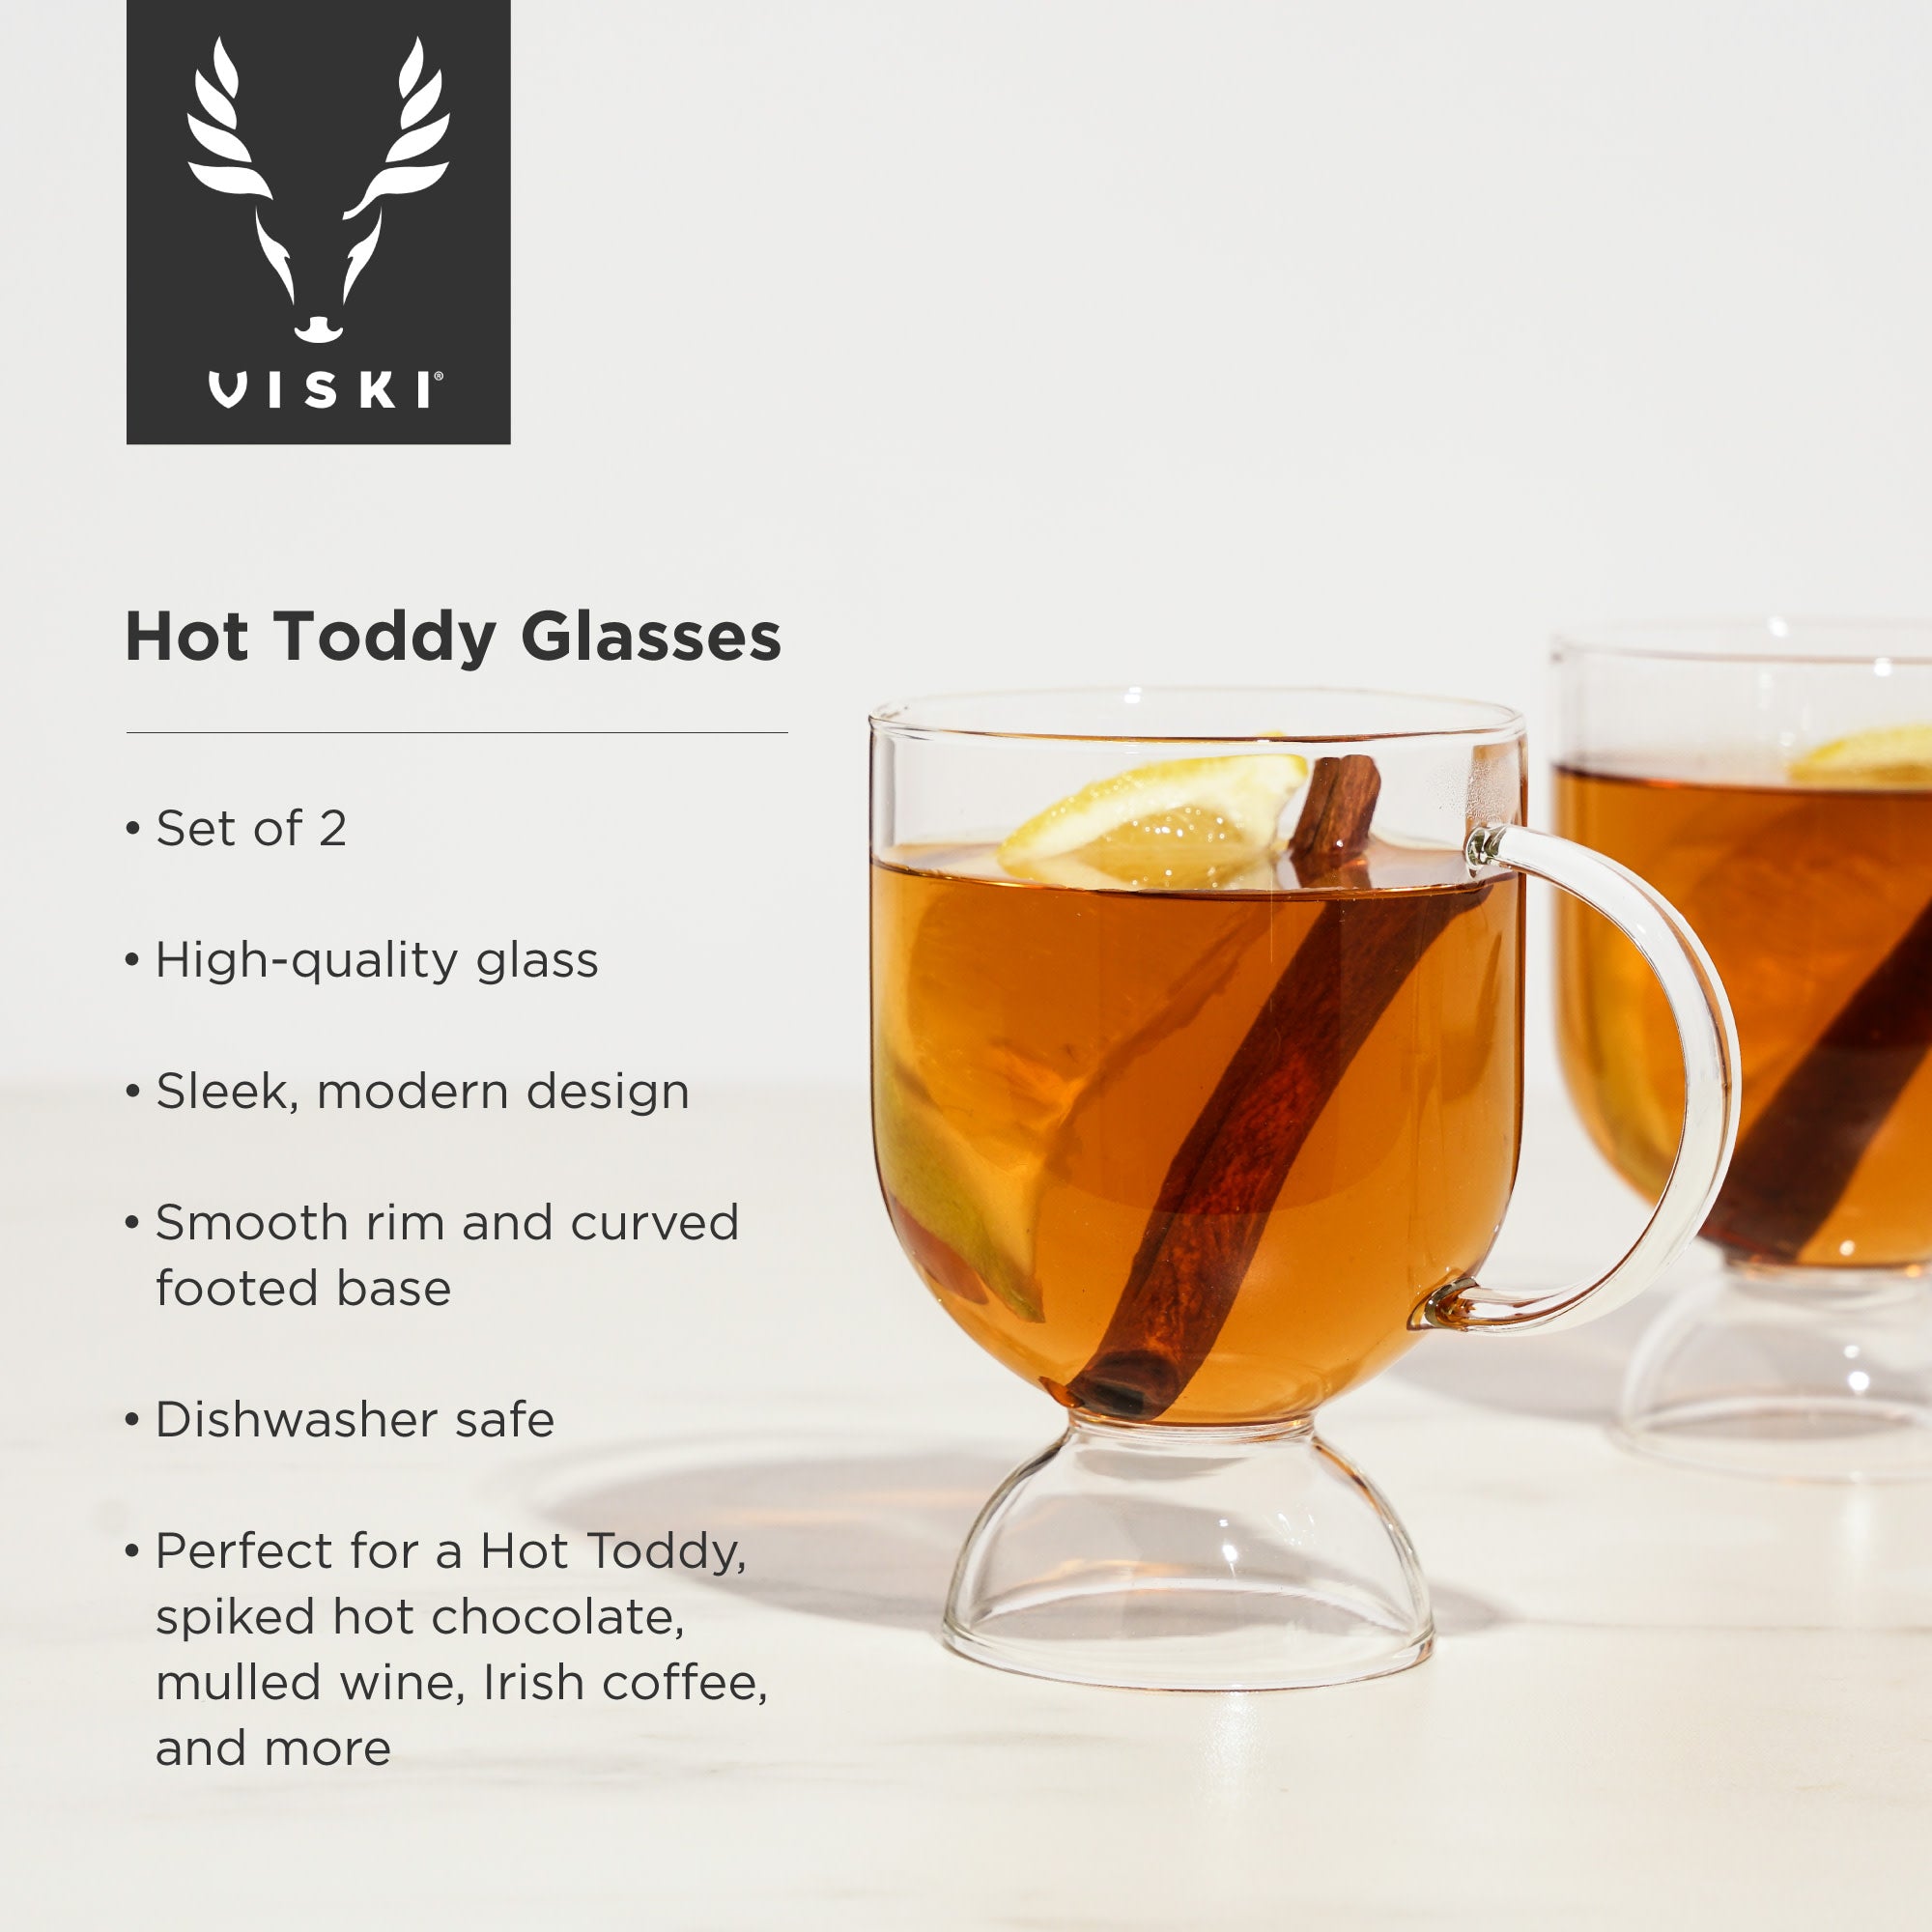 Hot Toddy Glasses by Viski (Set of 2)